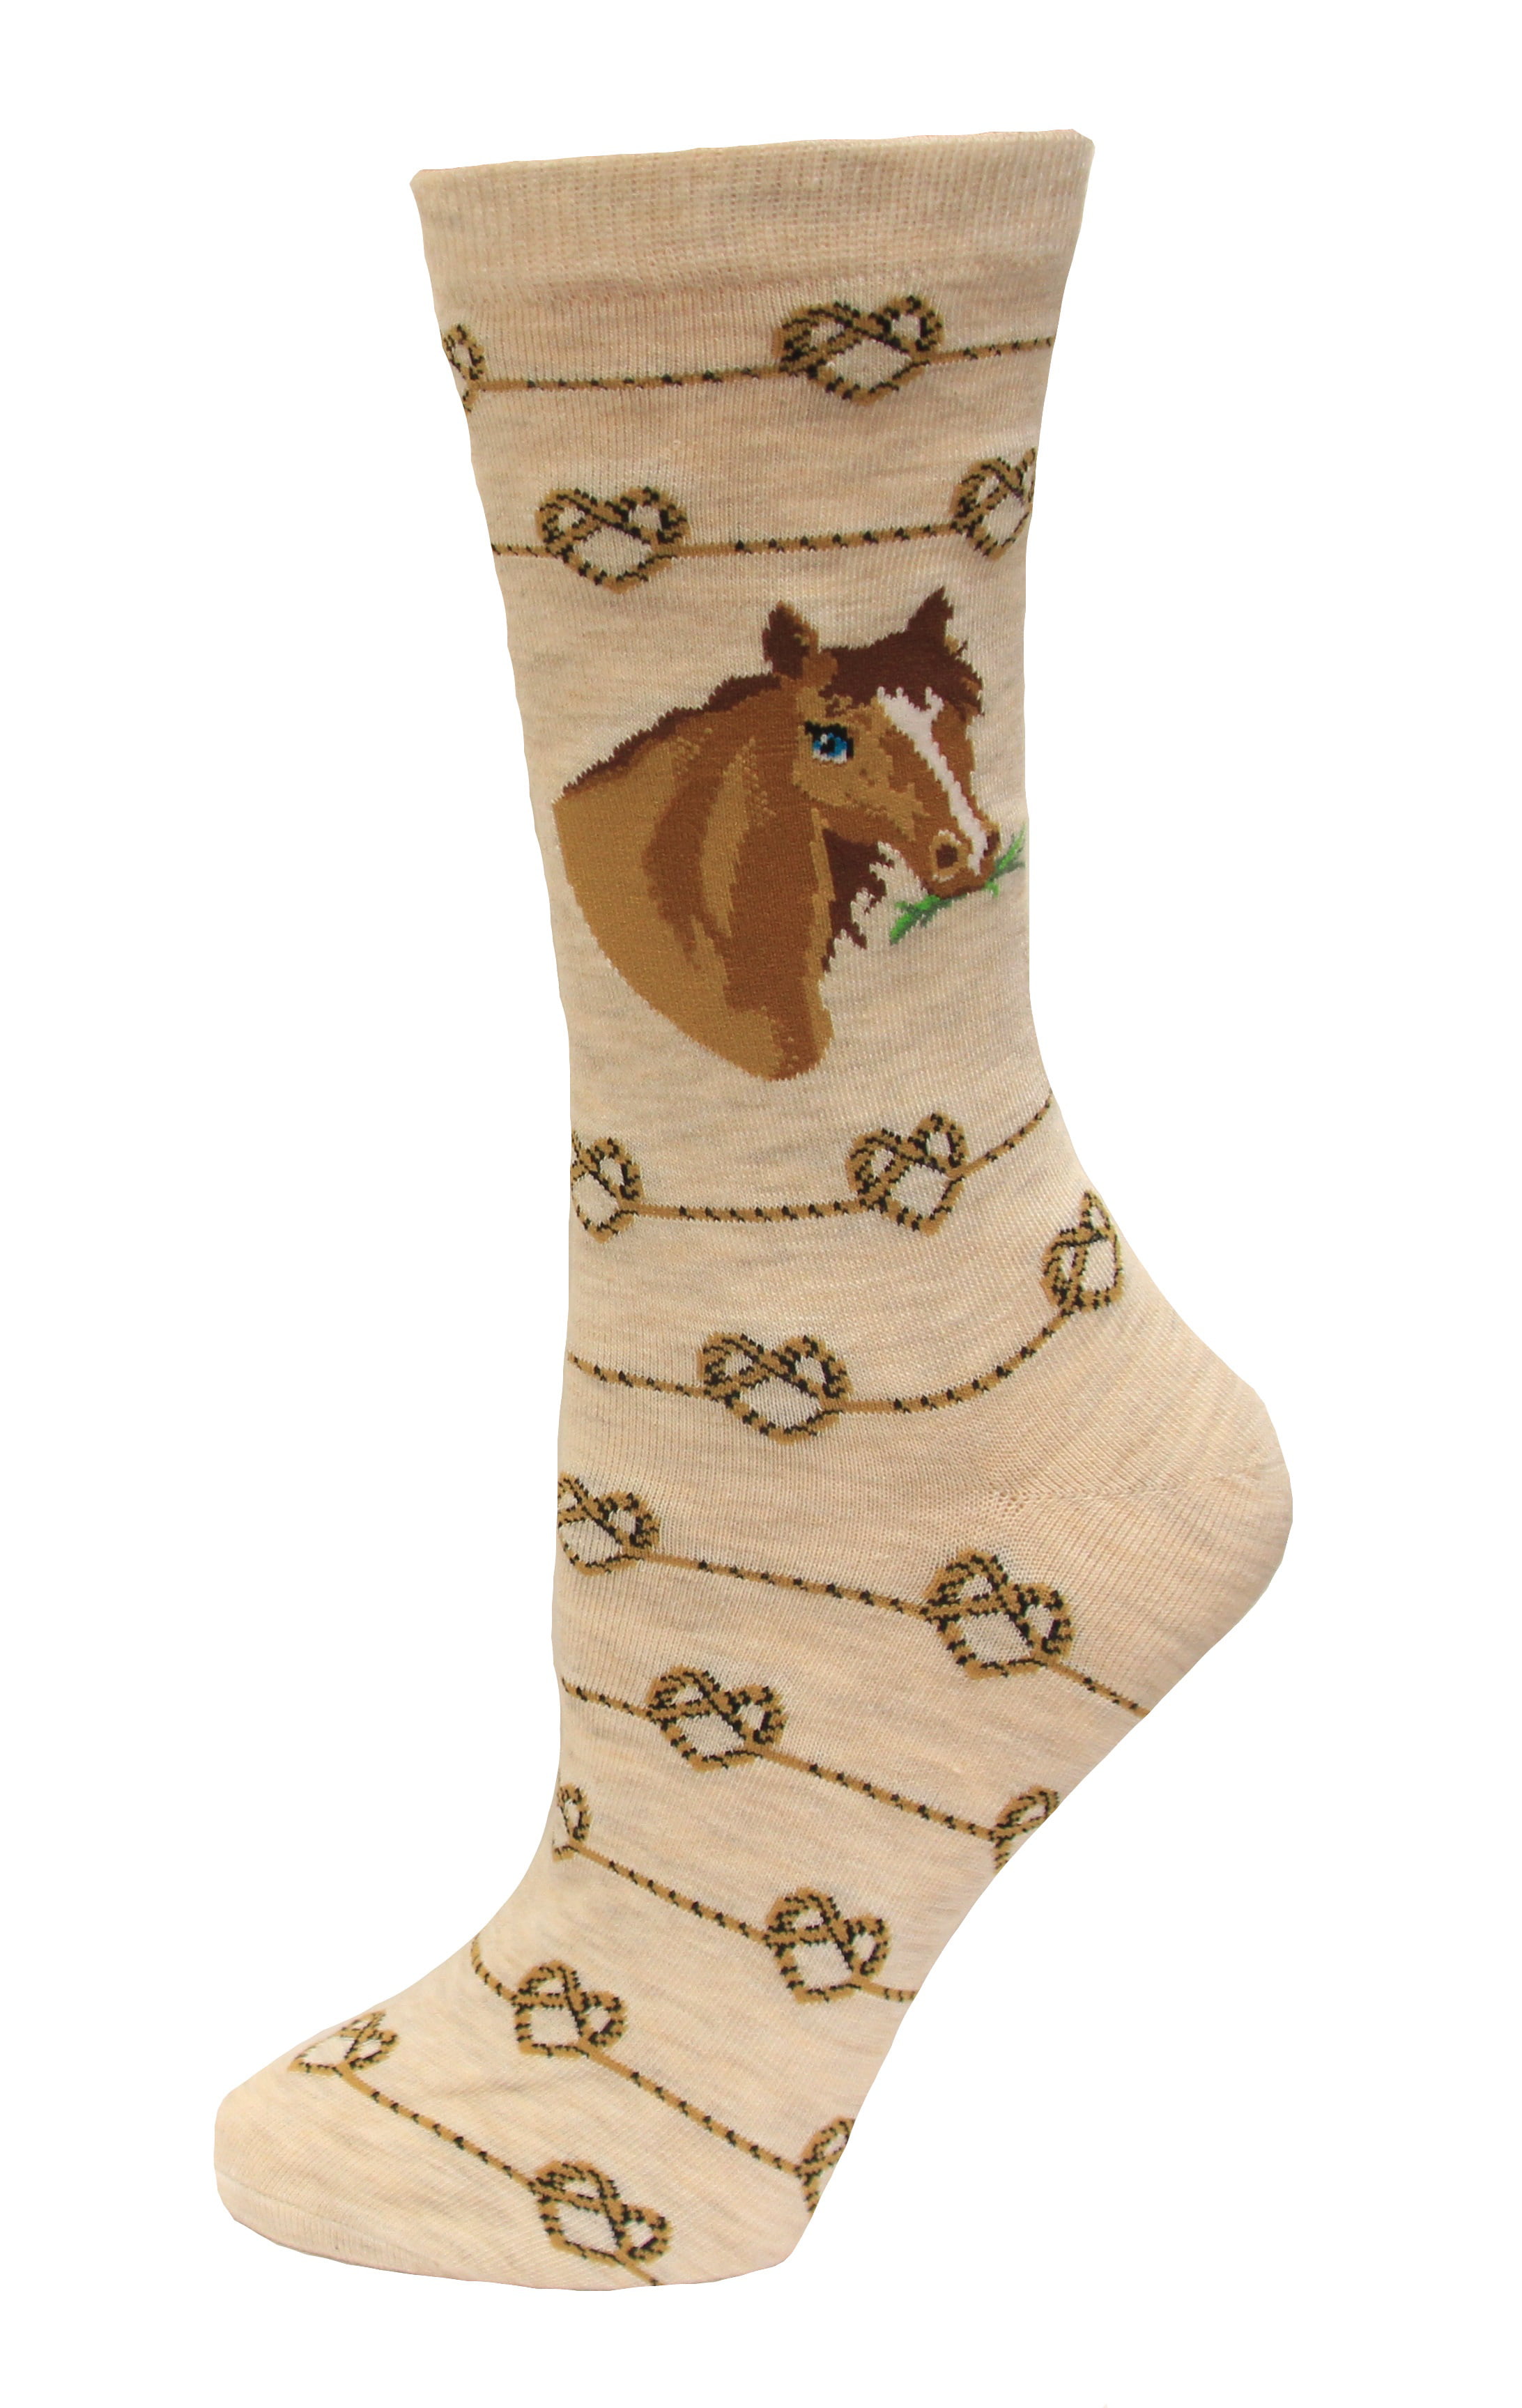 K.Bell Love Labrador Dogs Socks Cotton Blend Ladies Crew Beige Socks New 